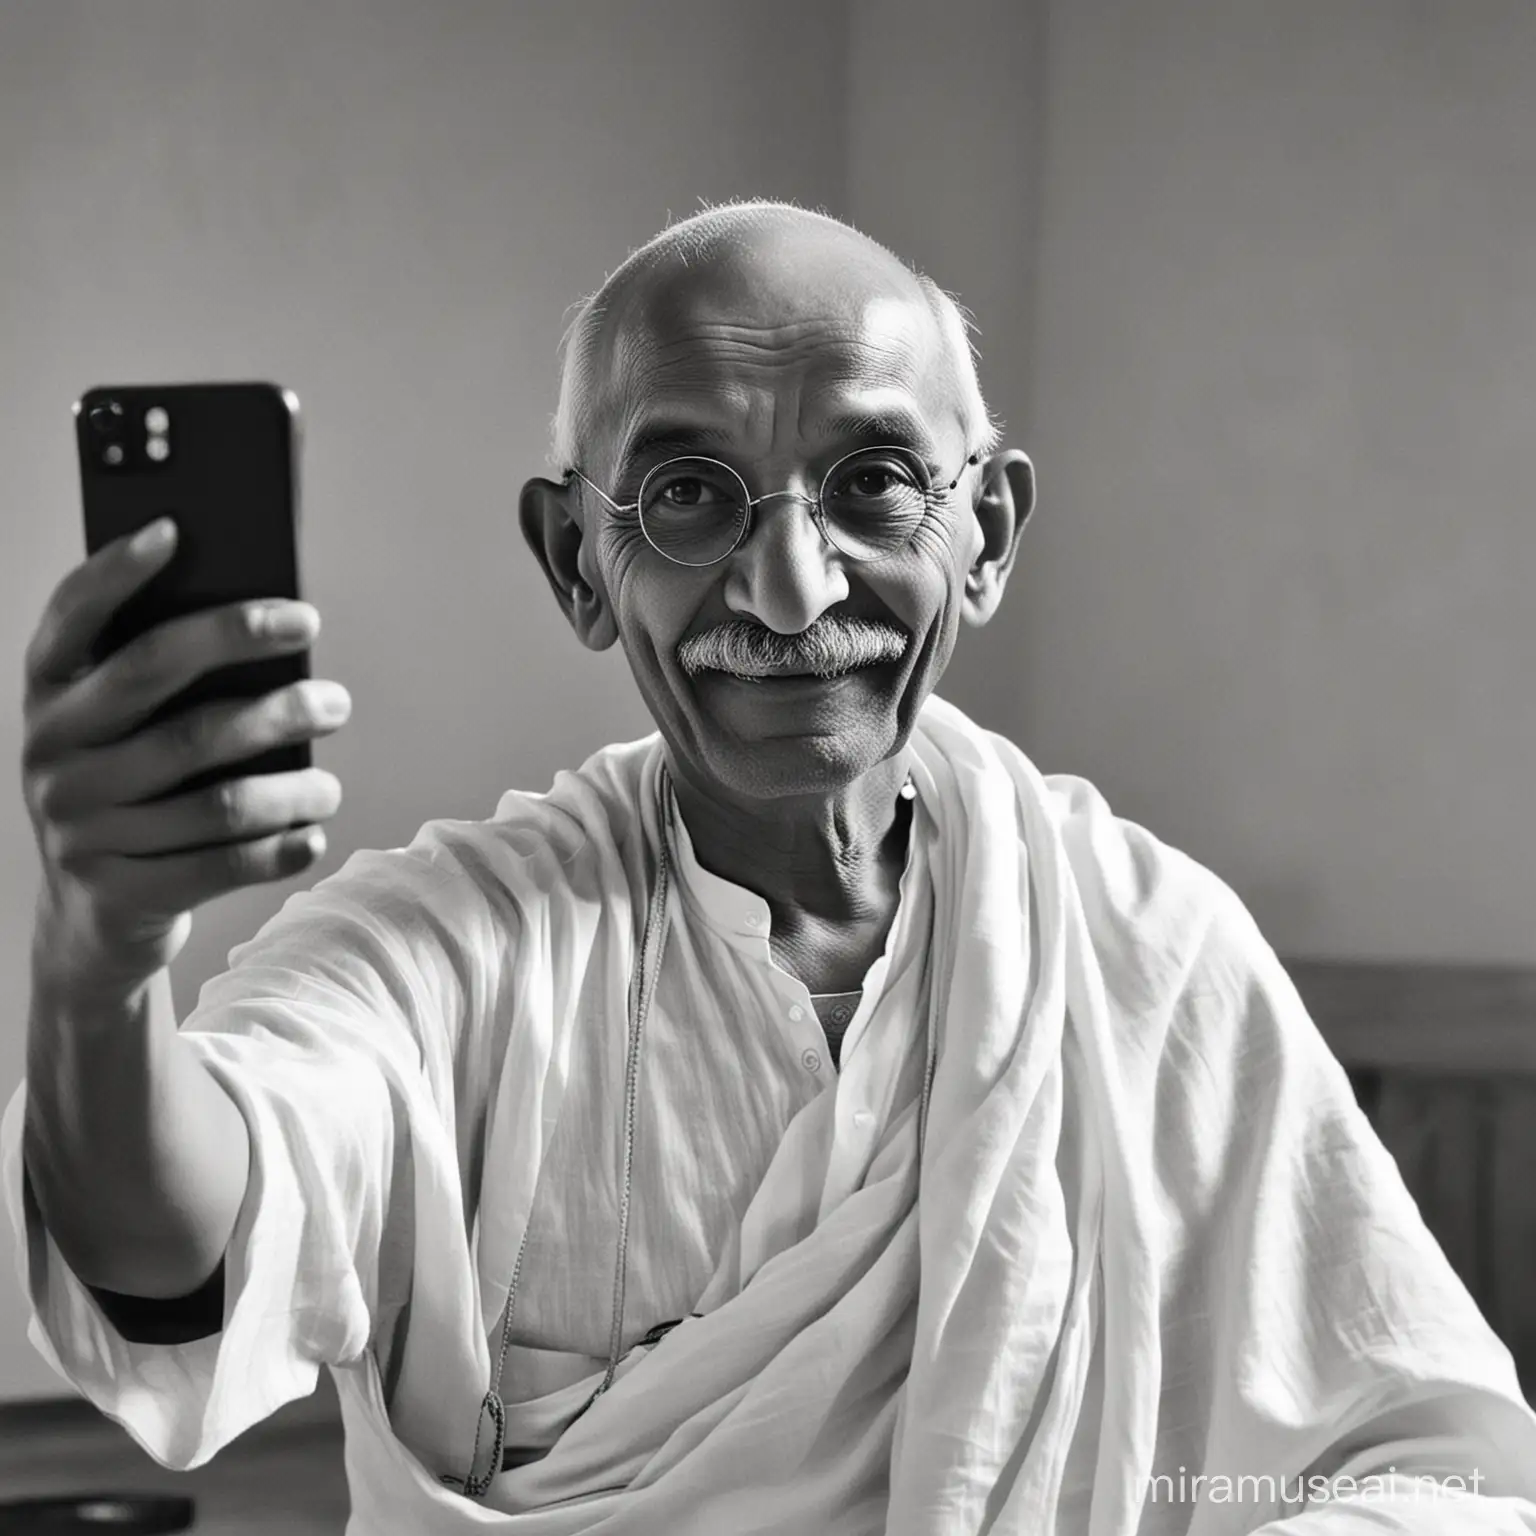 a picture of mahatma gandhi taking selfie of himself

